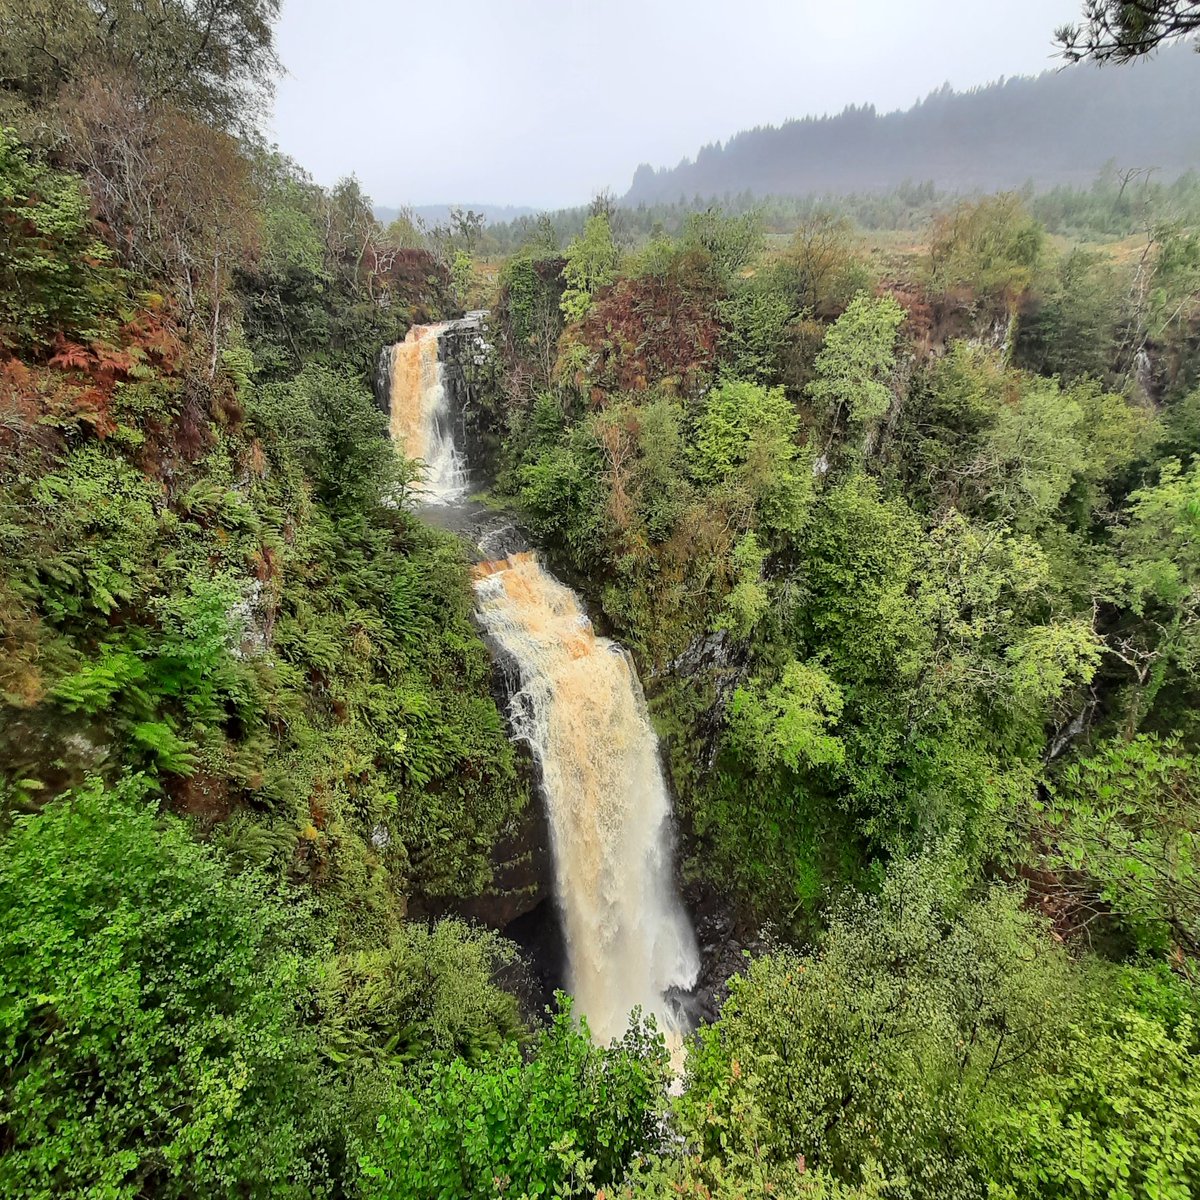 Glenashdale falls on the #isleofarran, looking spectacular after heavy rain. @ForestryLS #waterfalls @VisitScotland